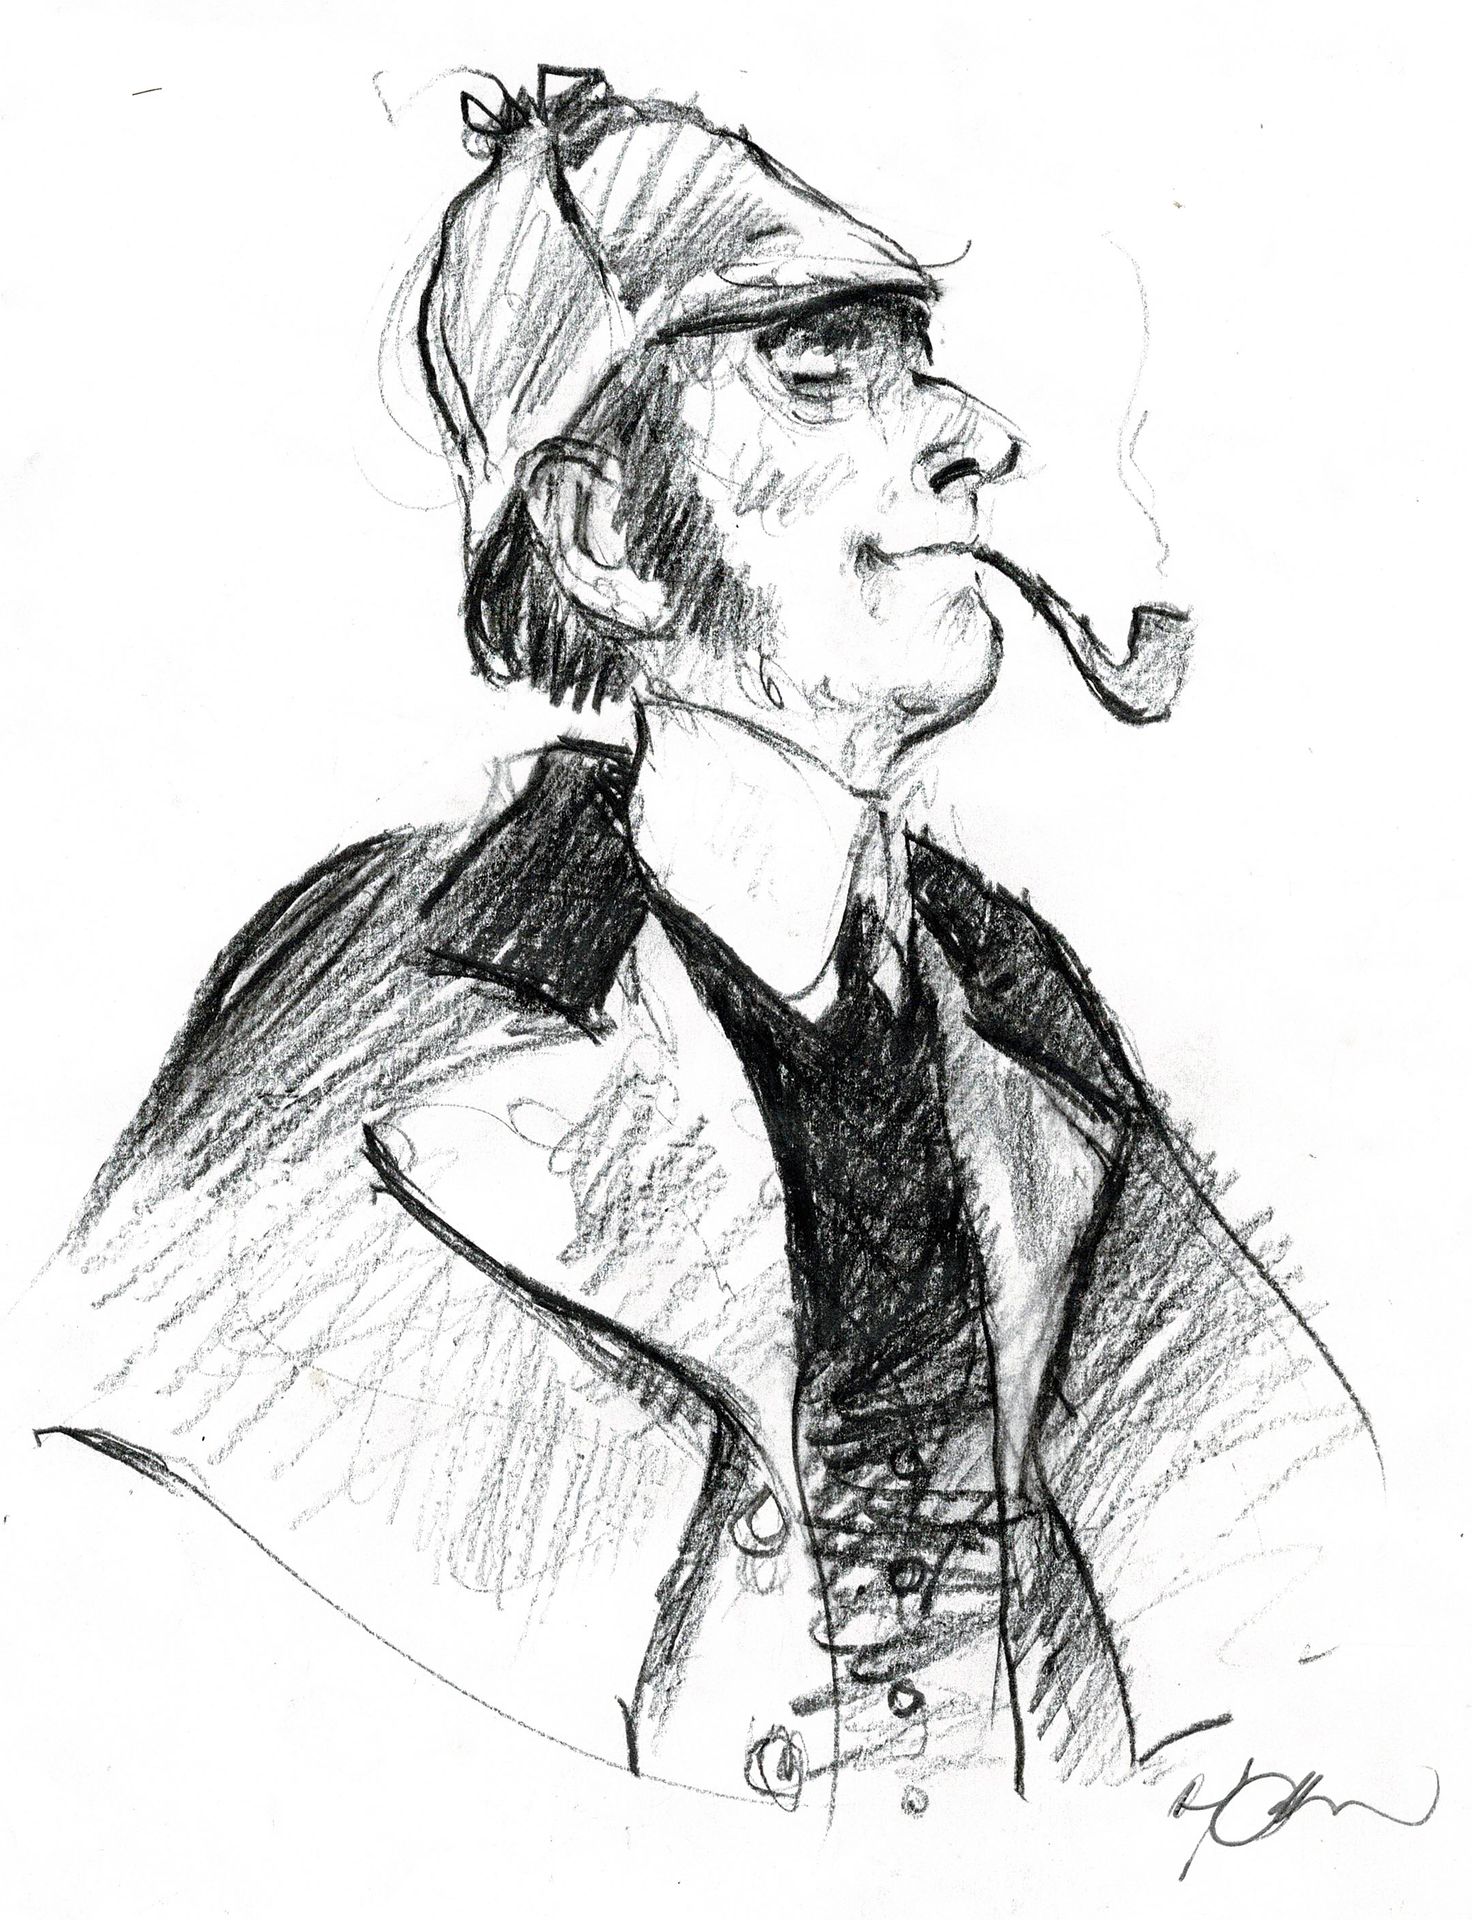 René FOLLET 
Sherlock Holmes, original charcoal drawing. Size : 26 cm x 19 cm.